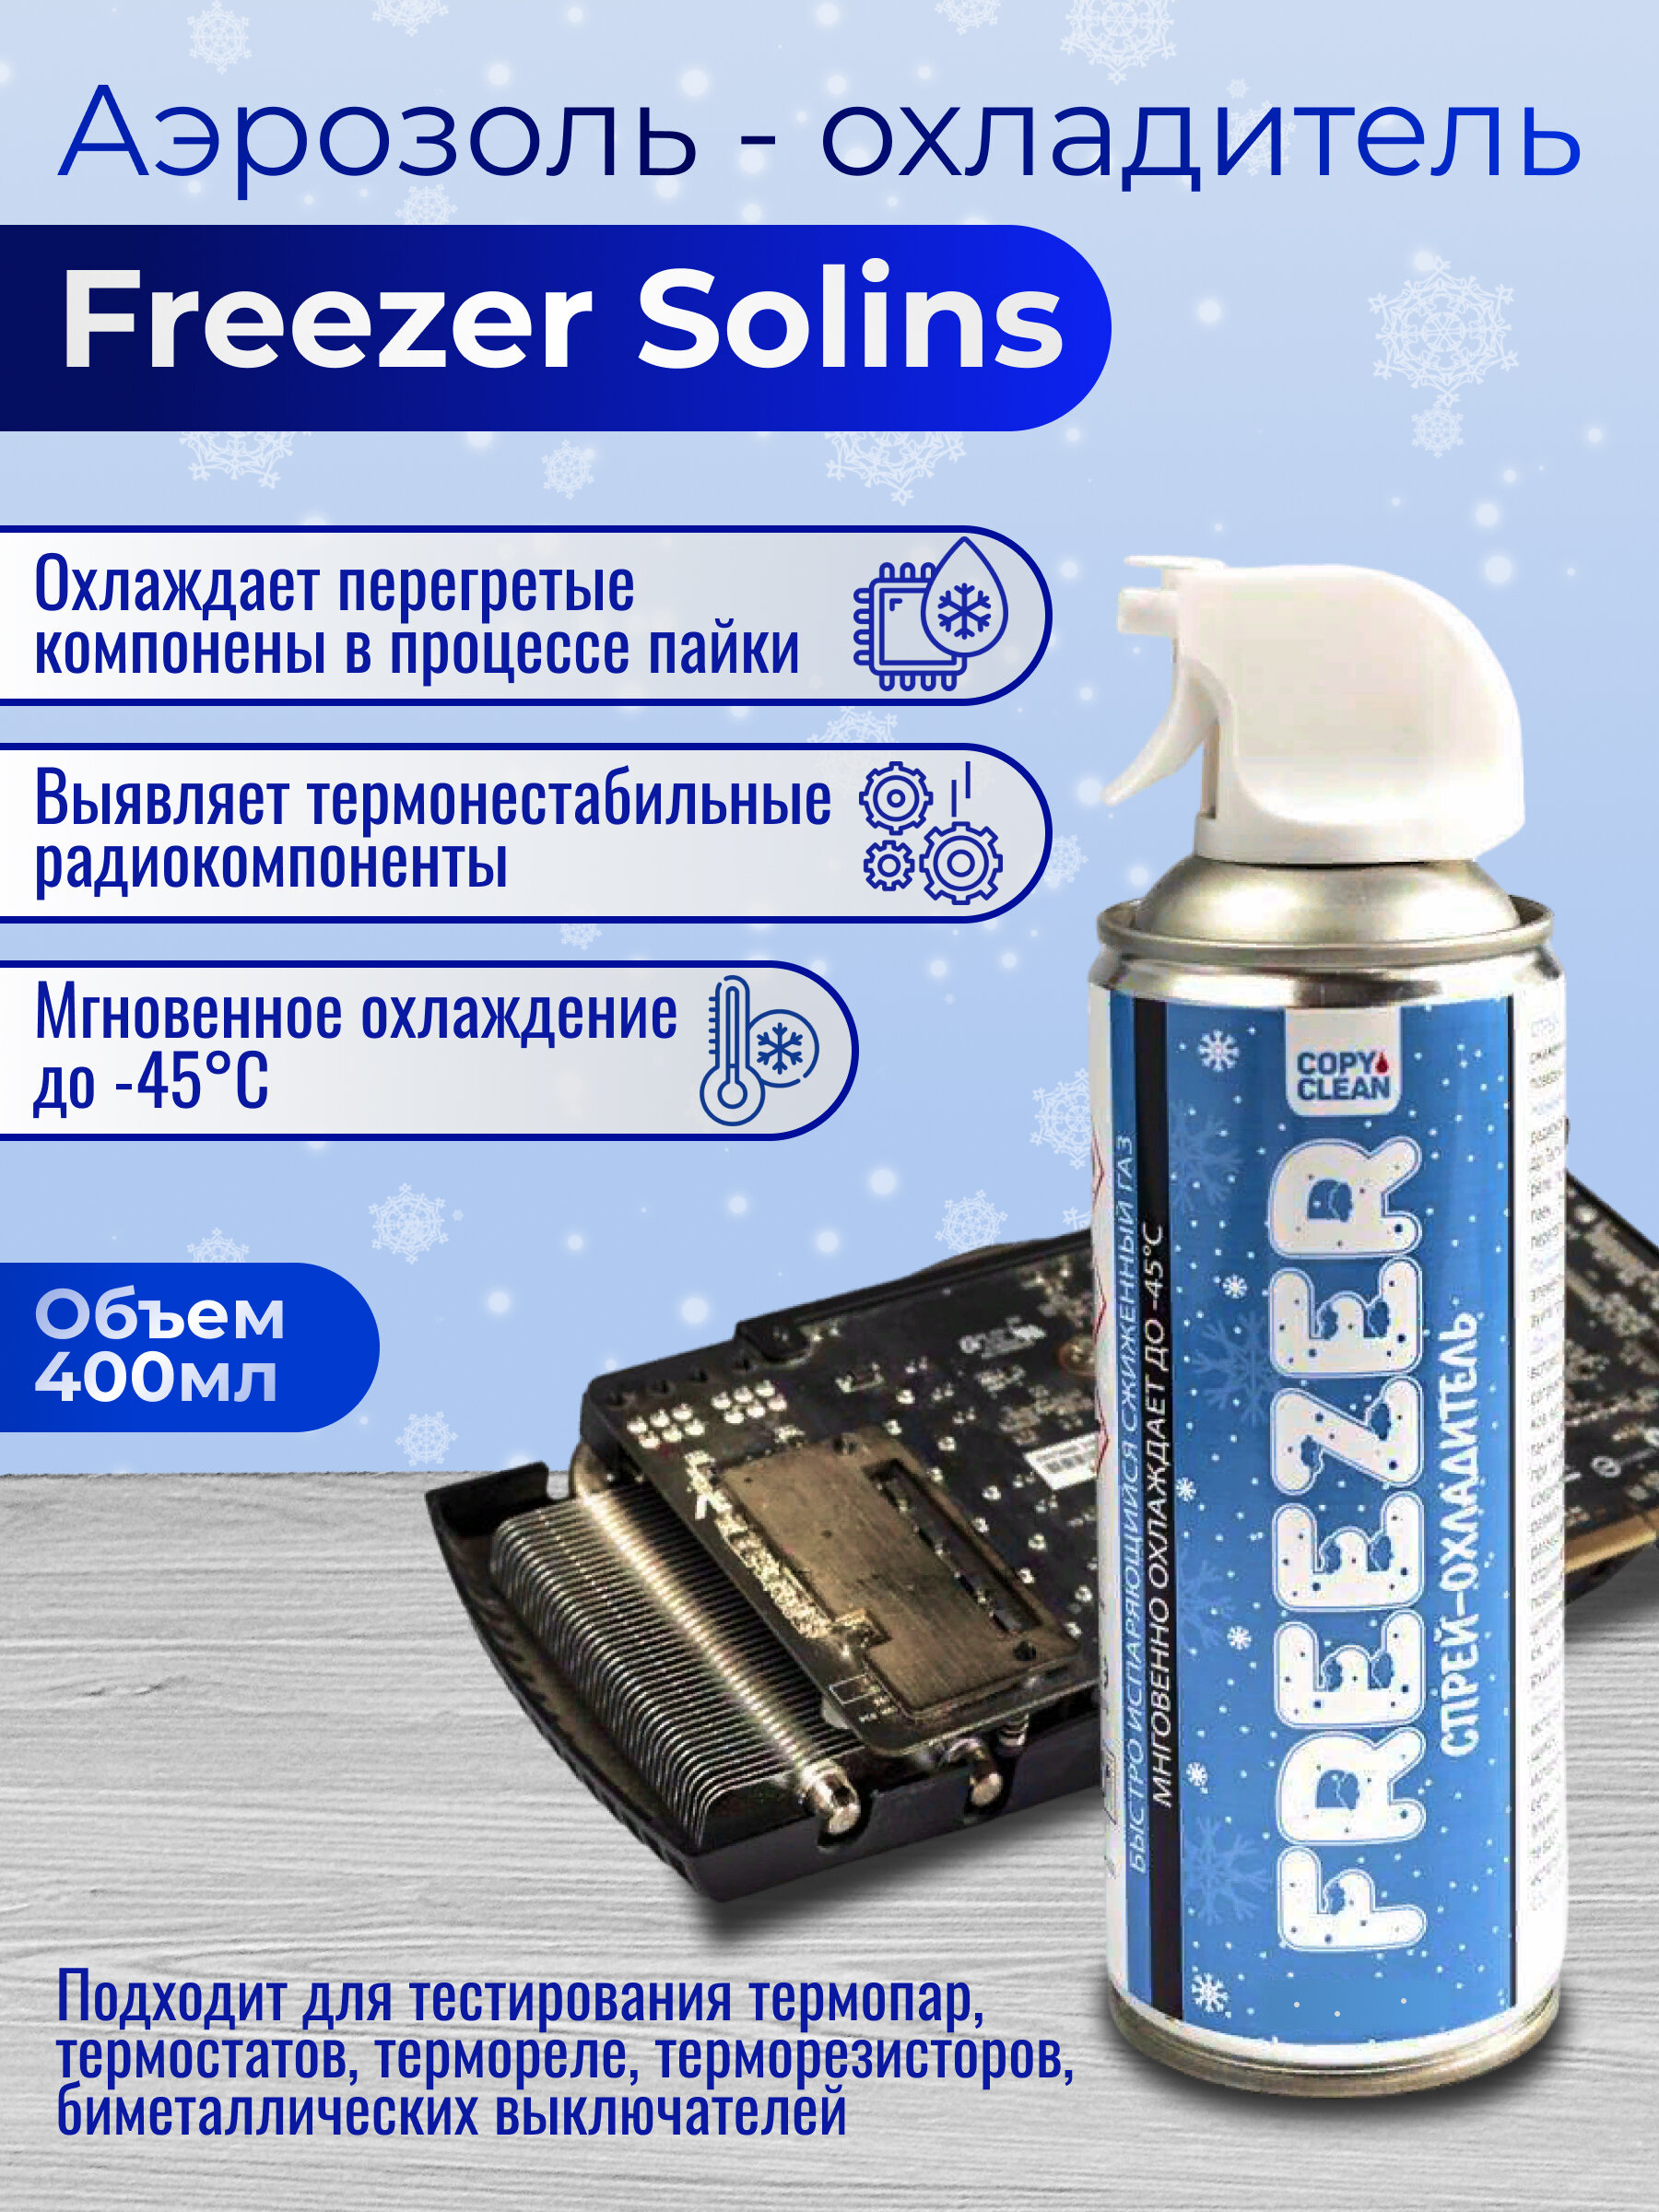  -  Freezer Solins 400 